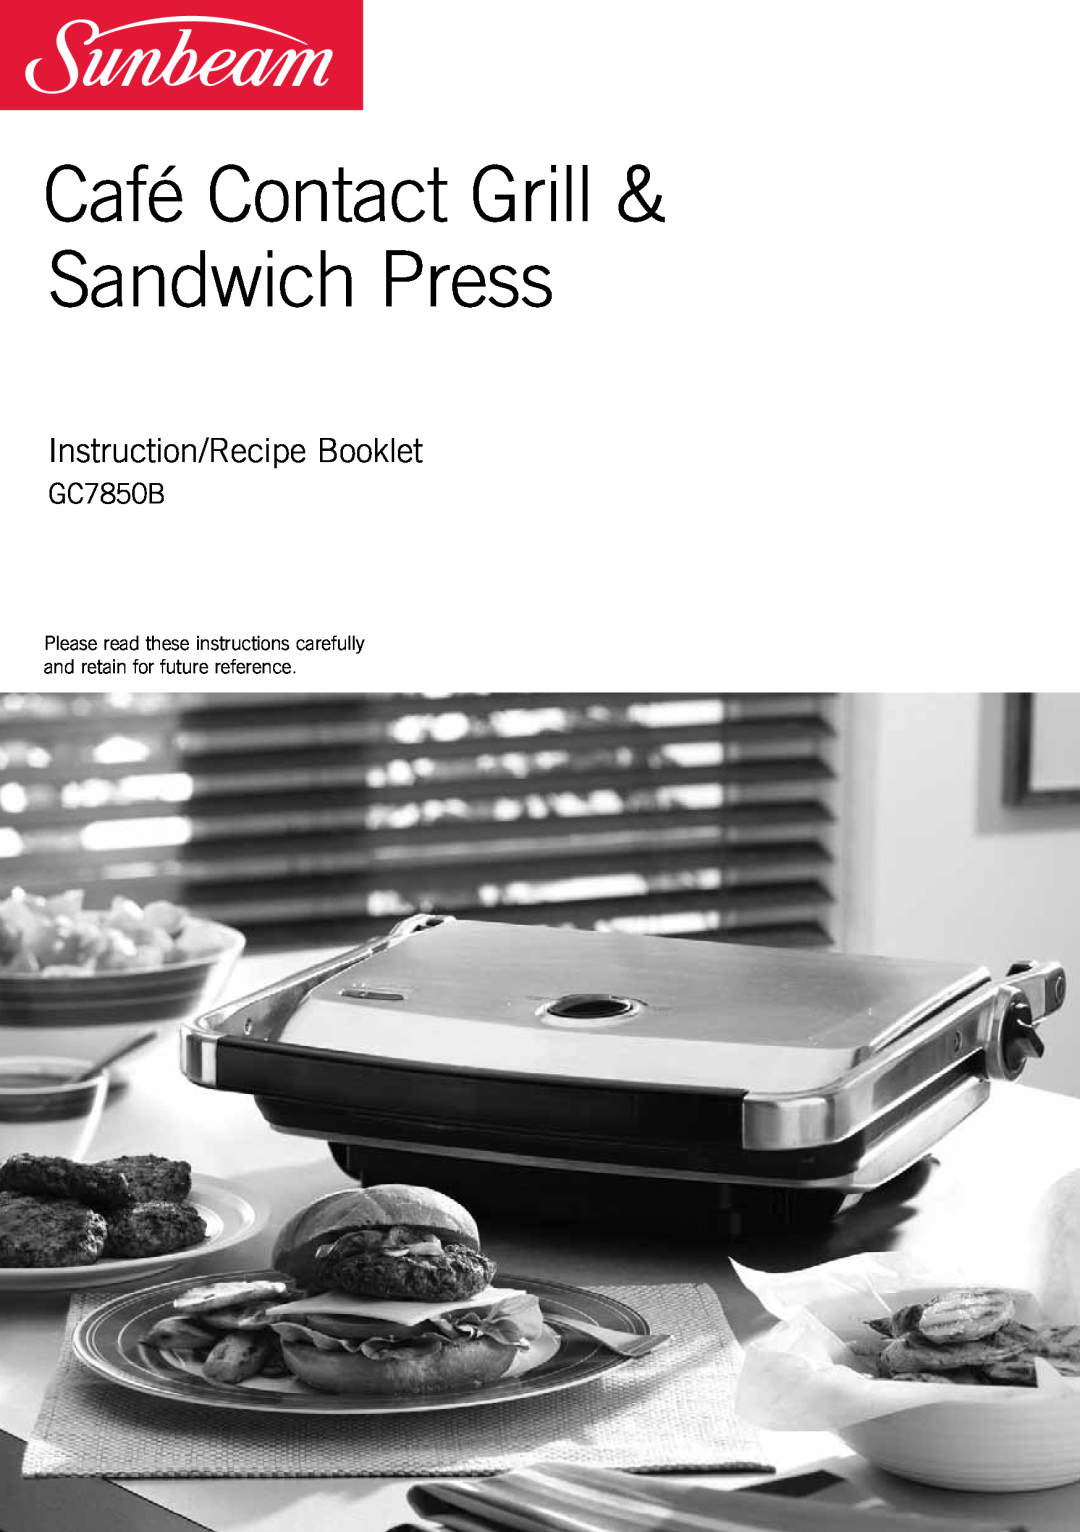 Sunbeam GC7850B manual Café Contact Grill & Sandwich Press, Instruction/Recipe Booklet 